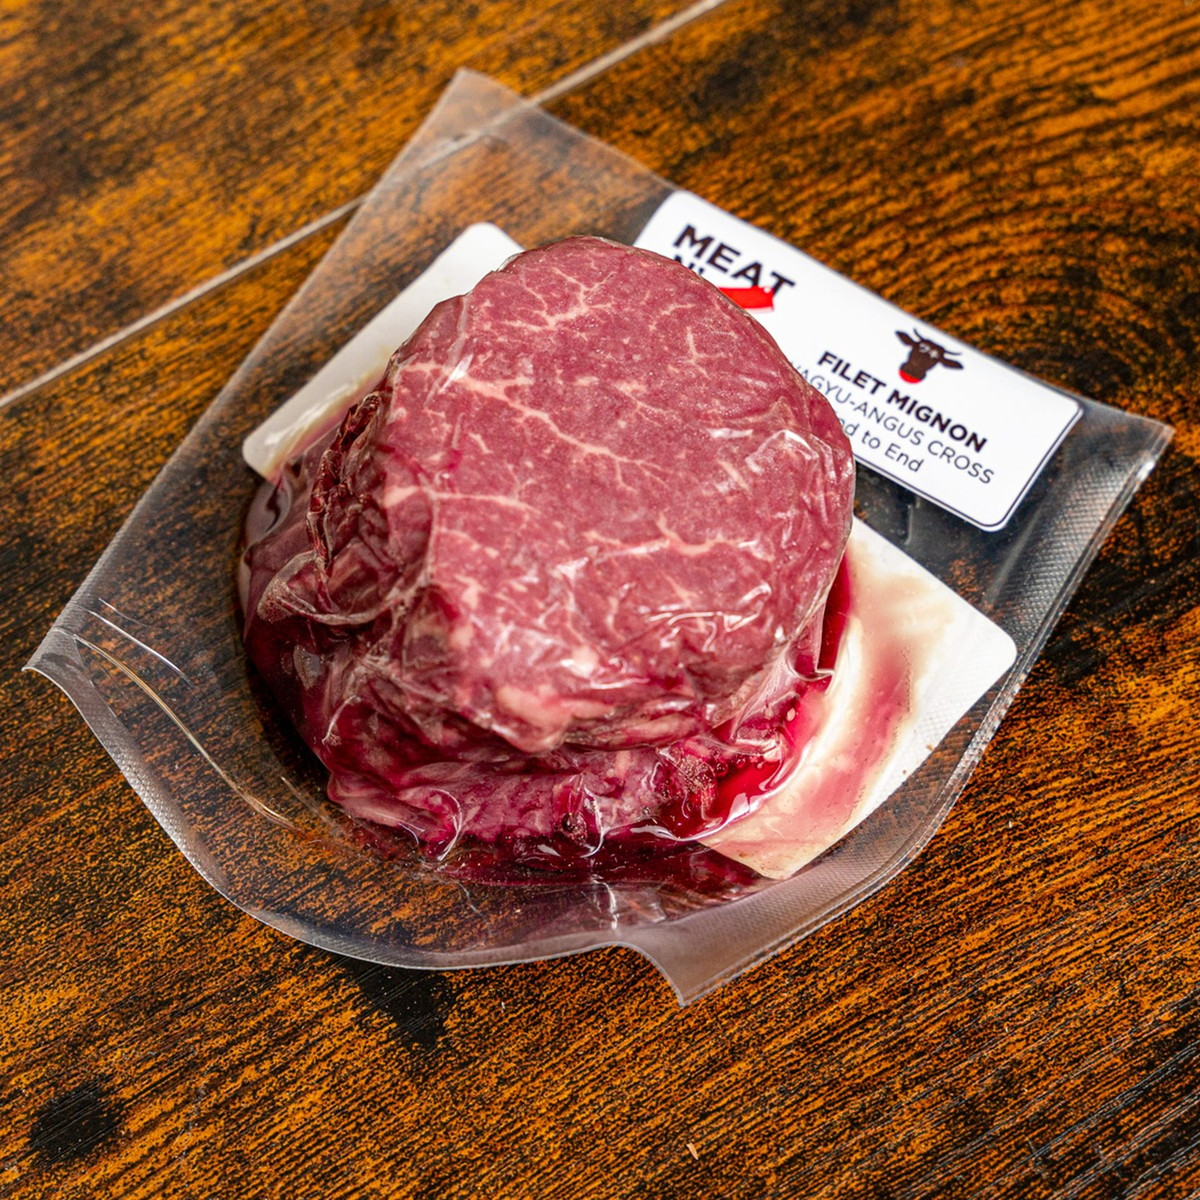 Swift Carne Norte Corned Beef 100 g – Demo Store Grocery